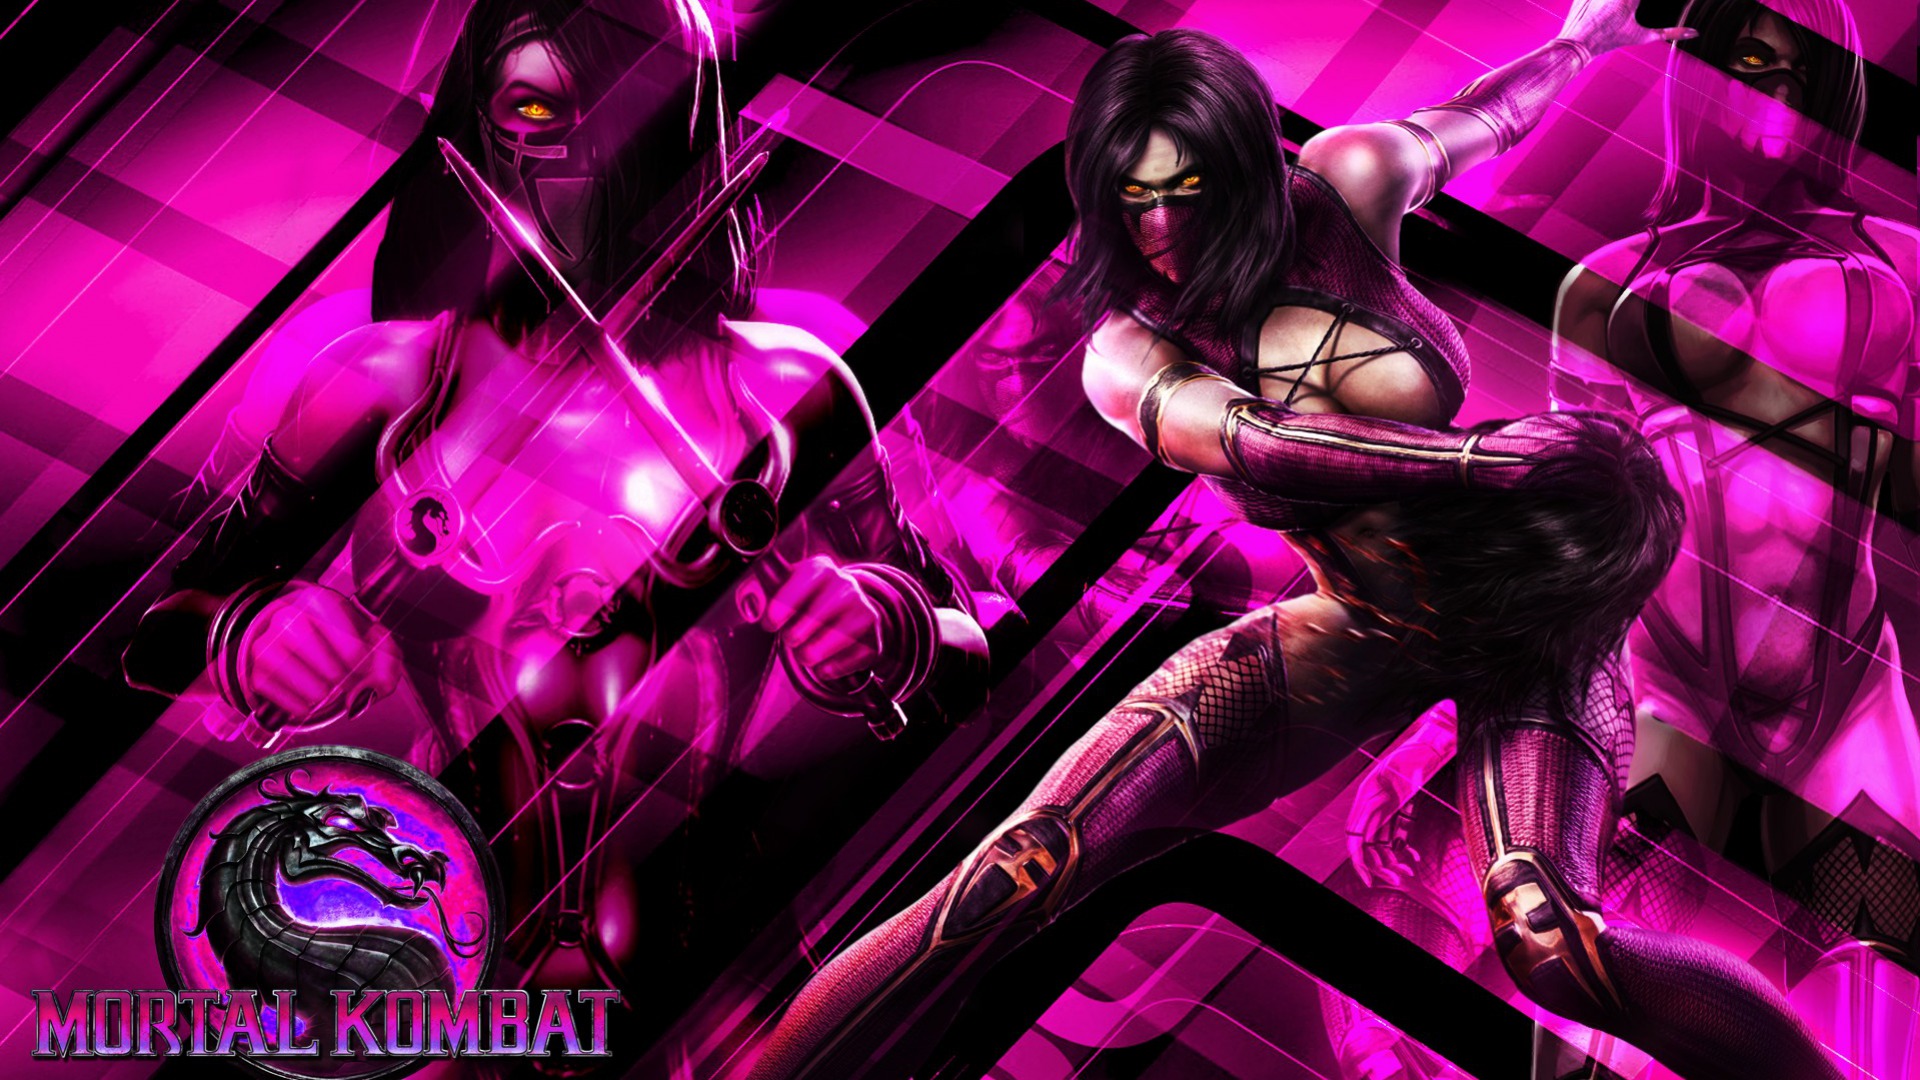 Mortal Kombat Hd Wallpaper Background Image 1920x1080 5679